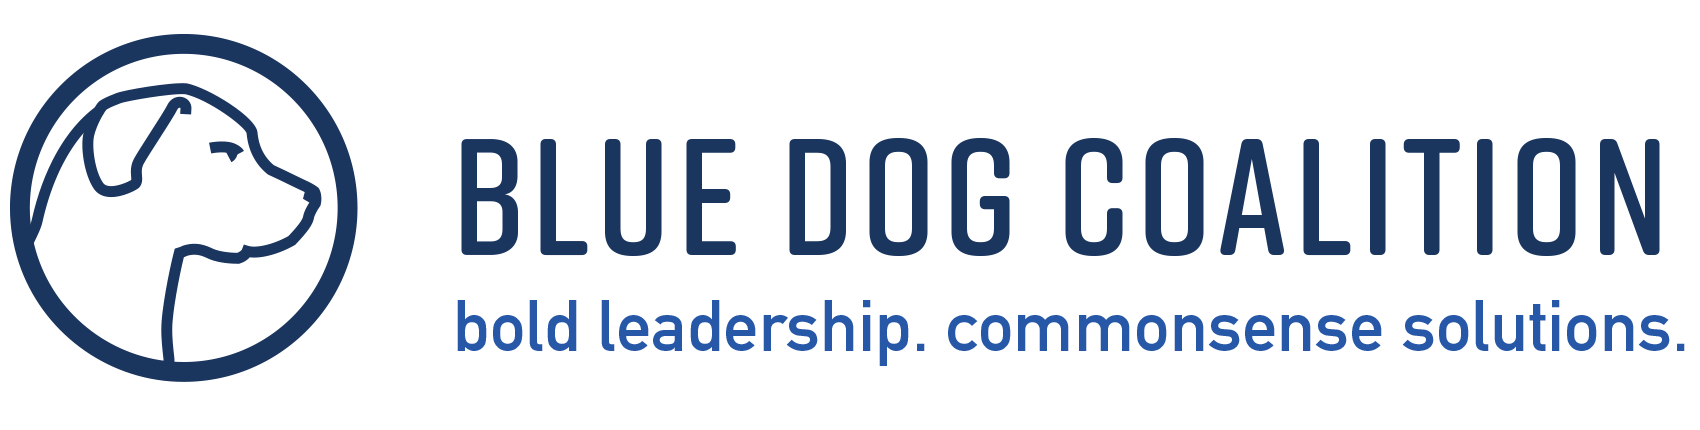 Blue Dog Logo - Blue Dog Coalition | Bold Leadership. Common Sense Solutions